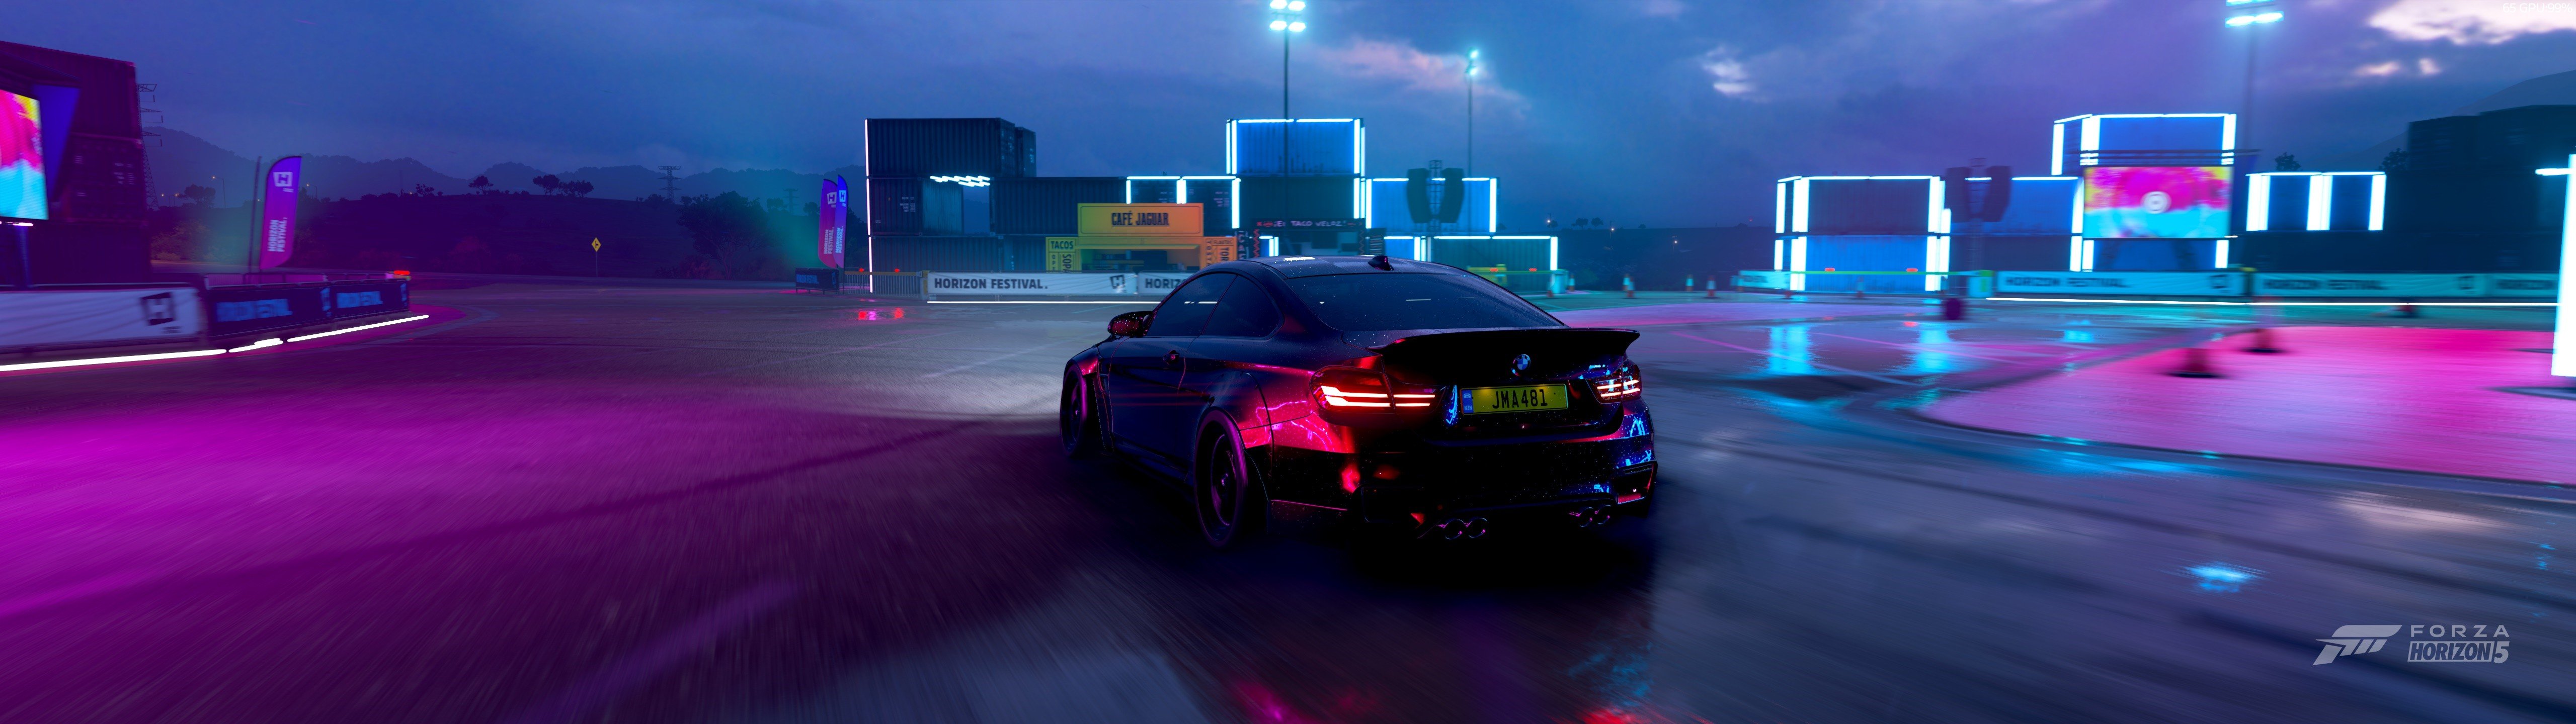 BMW M Forza Horizon 5 Photo Realistic Neon Car Video Games Wallpaper:5120x1440